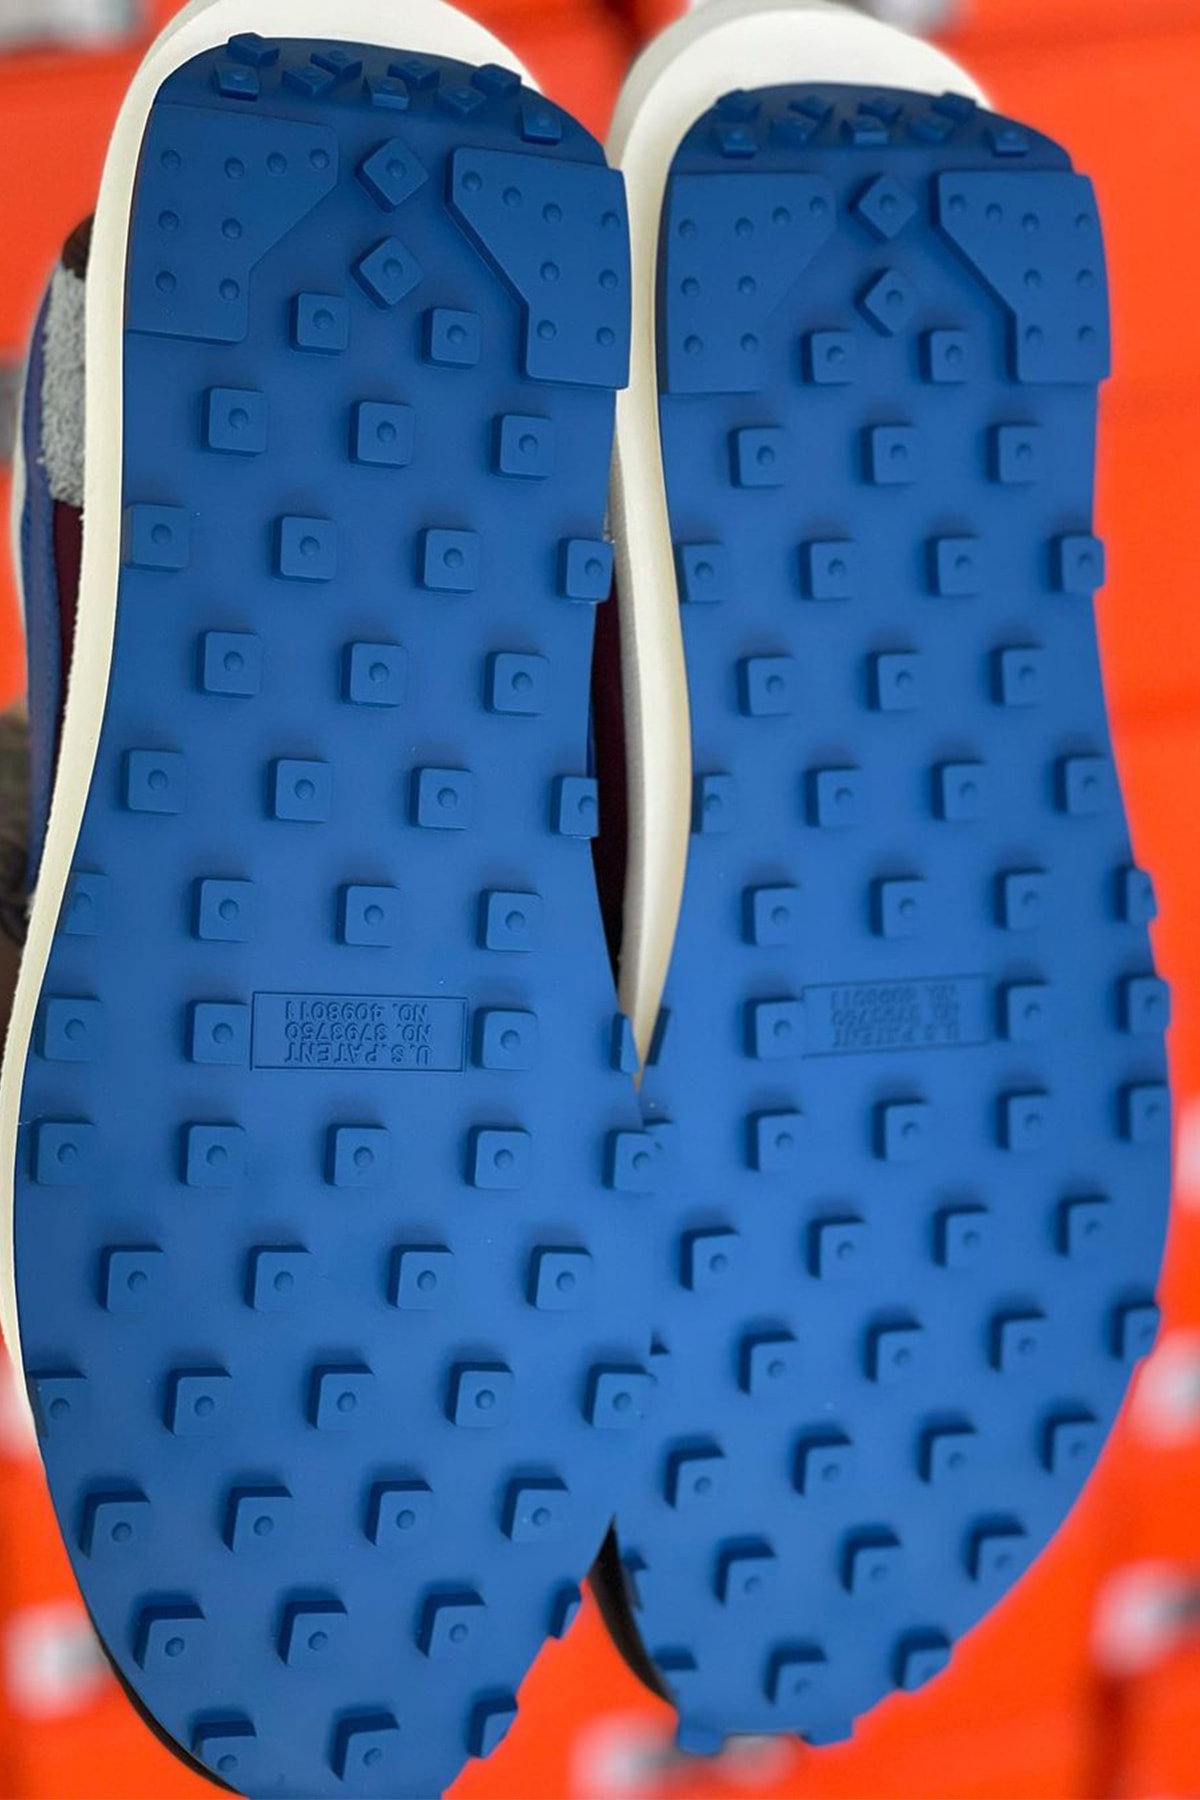 UNDERCOVER x sacai x Nike LDWaffle 三方聯乘系列清晰圖輯曝光